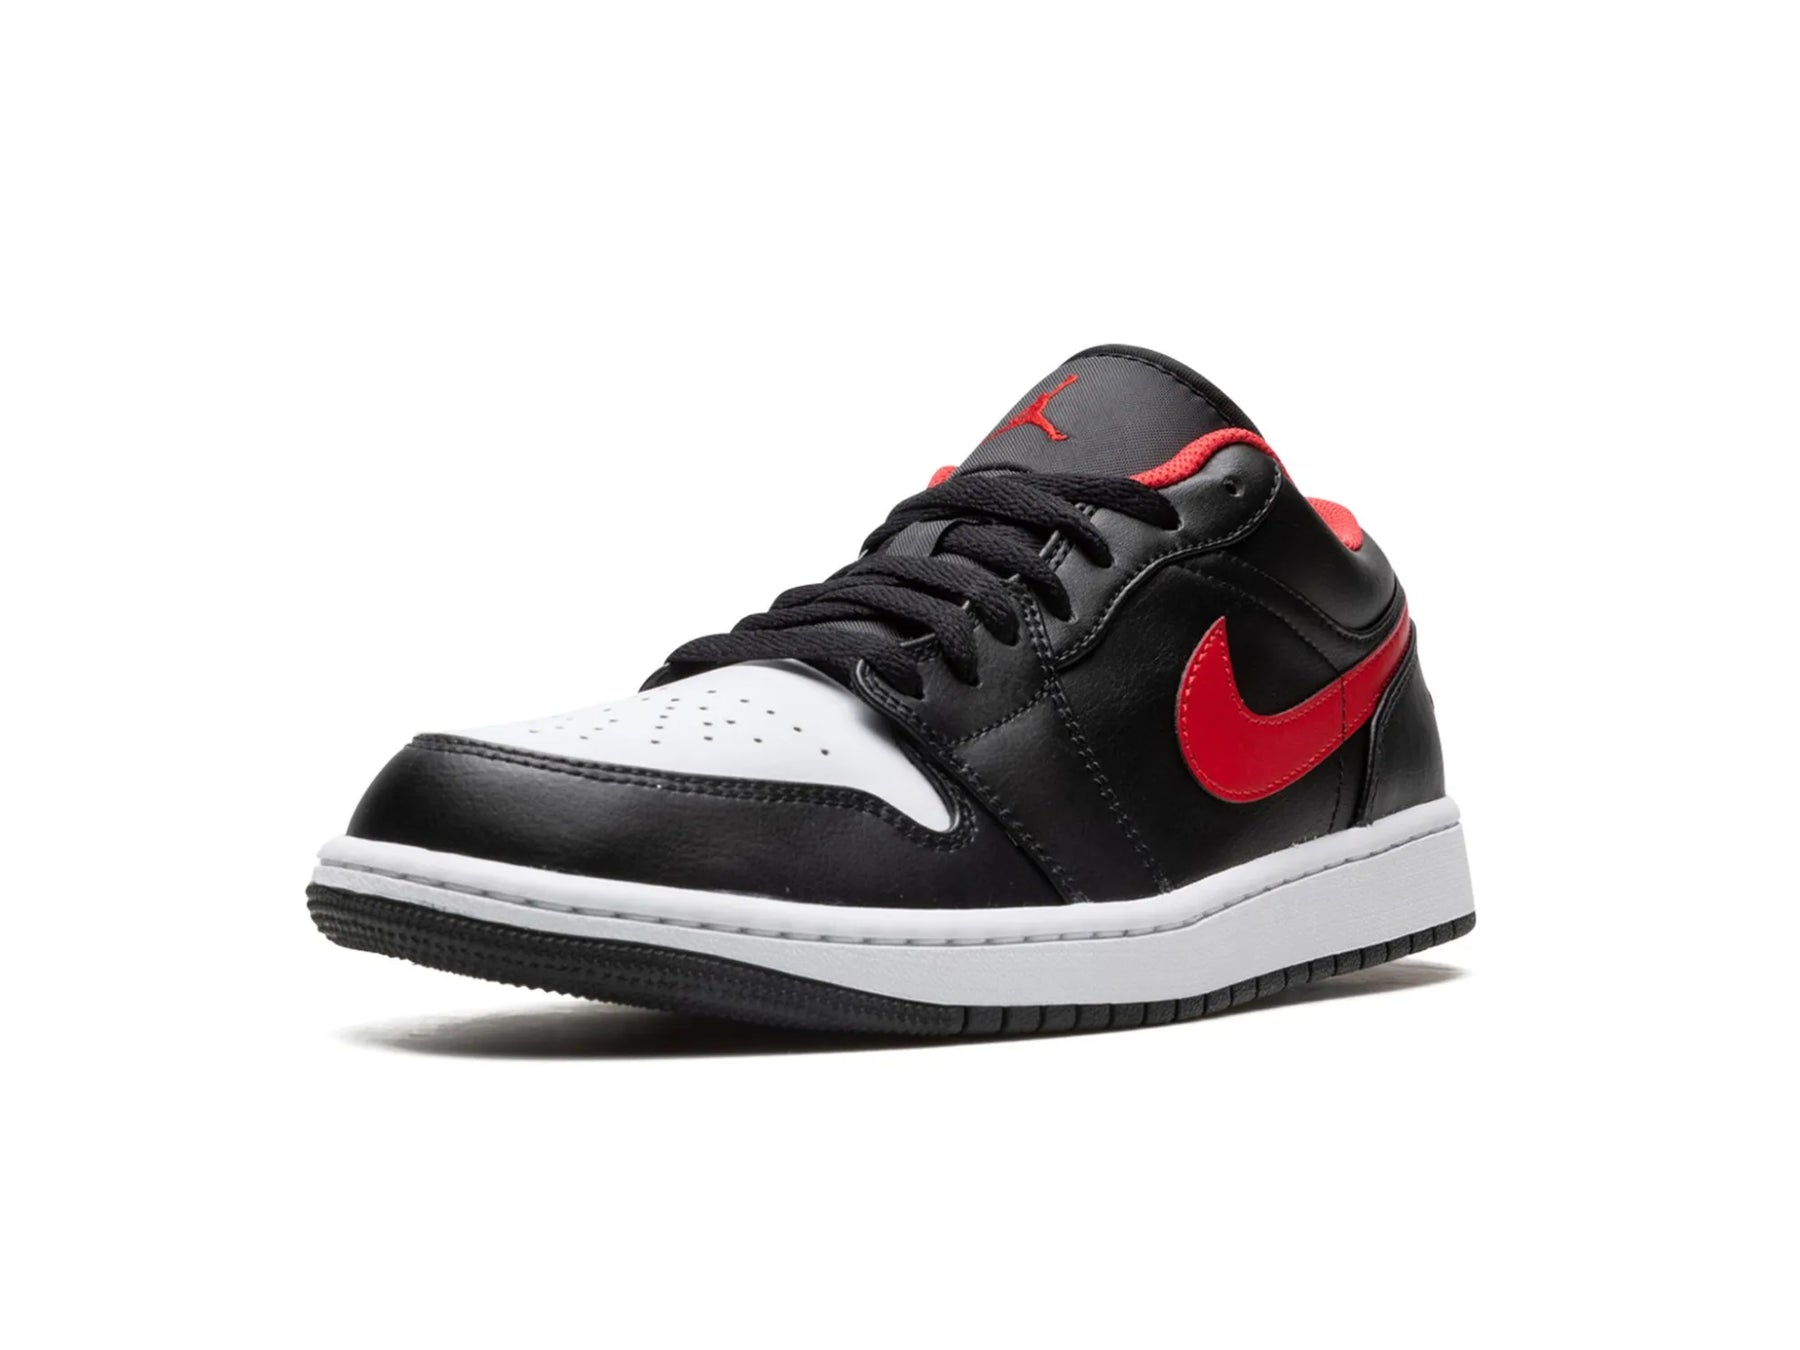 Nike Air Jordan 1 Low "White Toe" - street-bill.dk